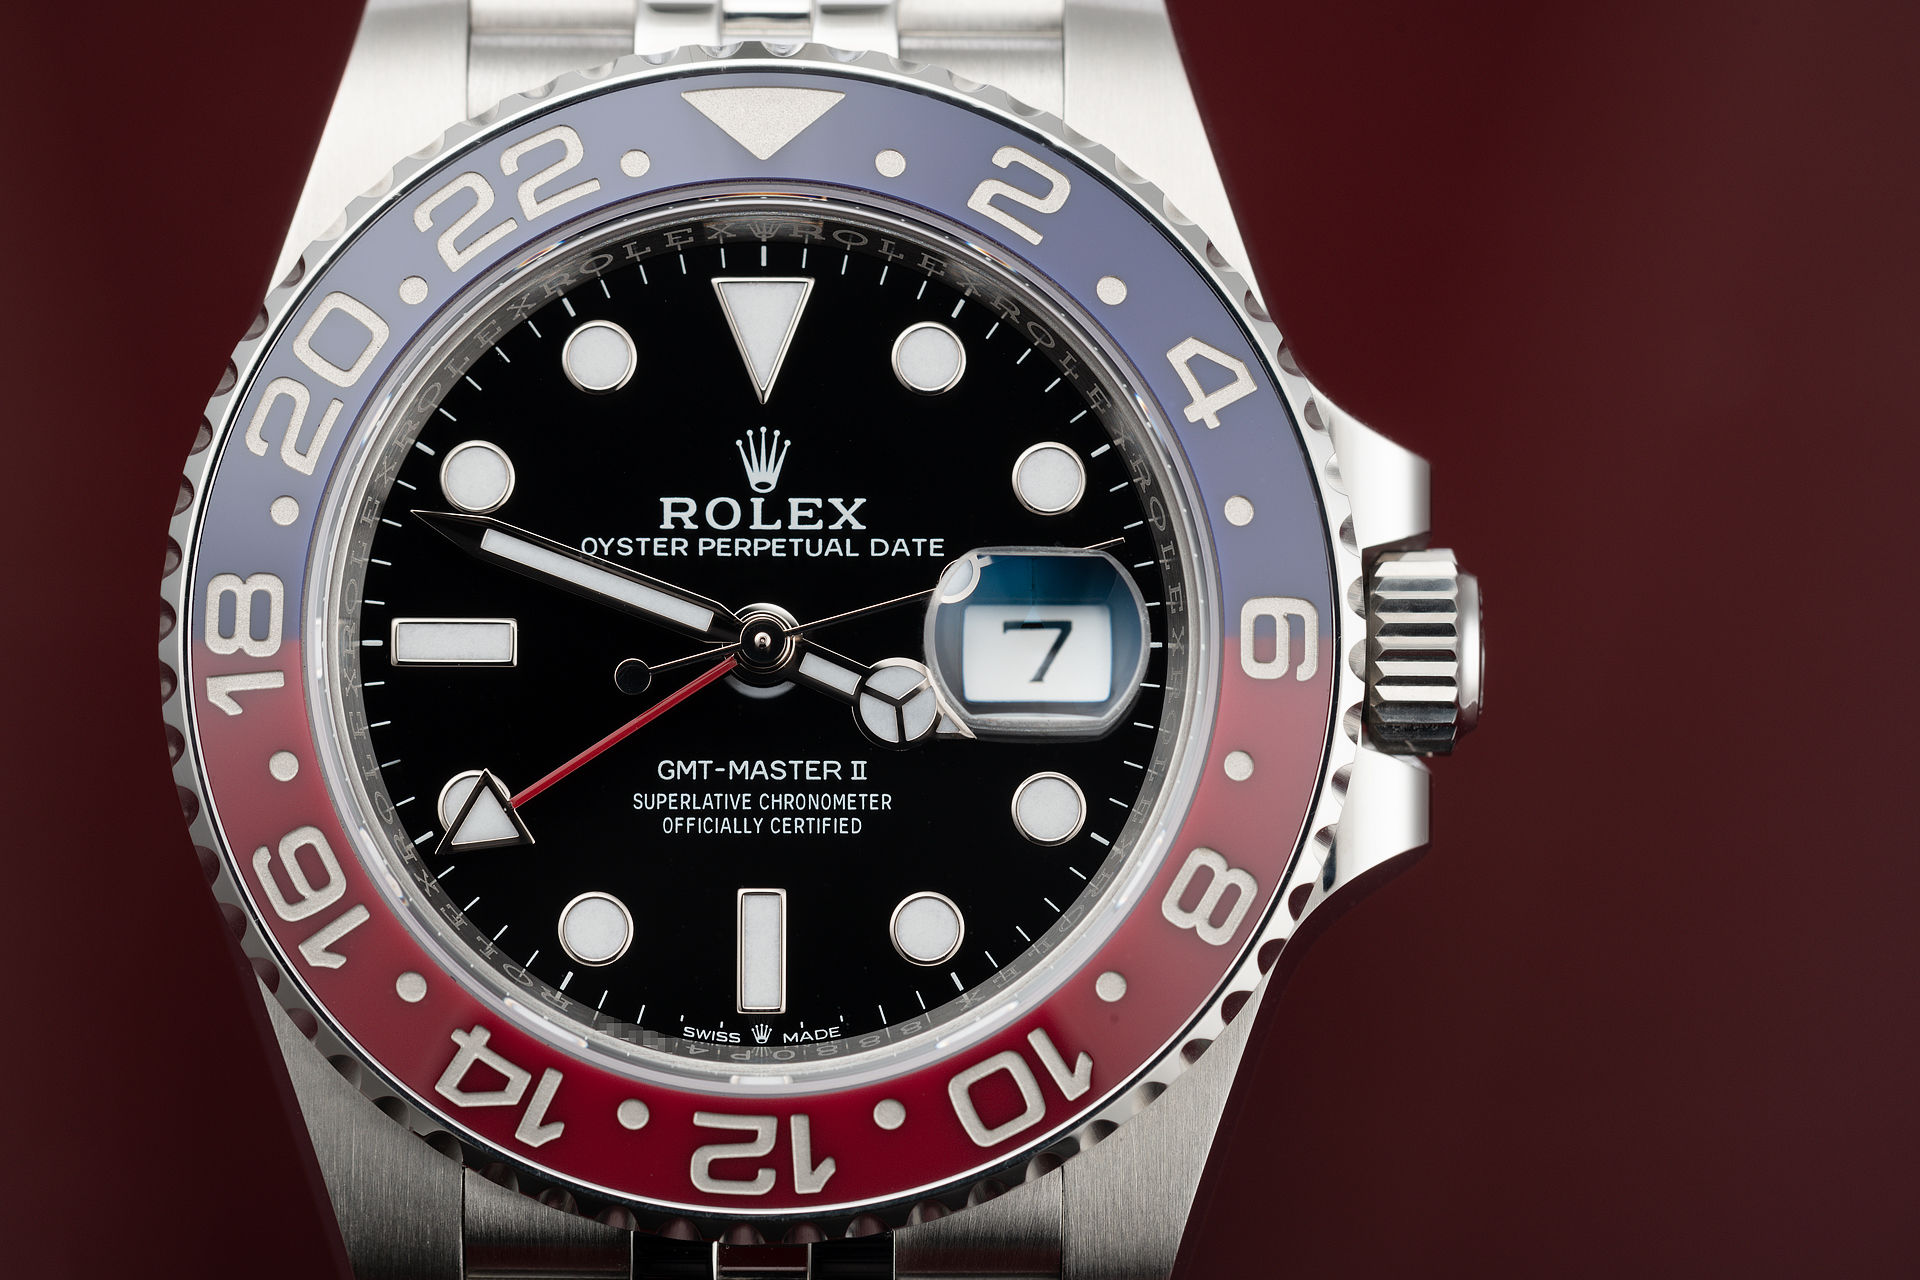 ref 126710BLRO | Full Set 'Unworn' | Rolex GMT-Master II